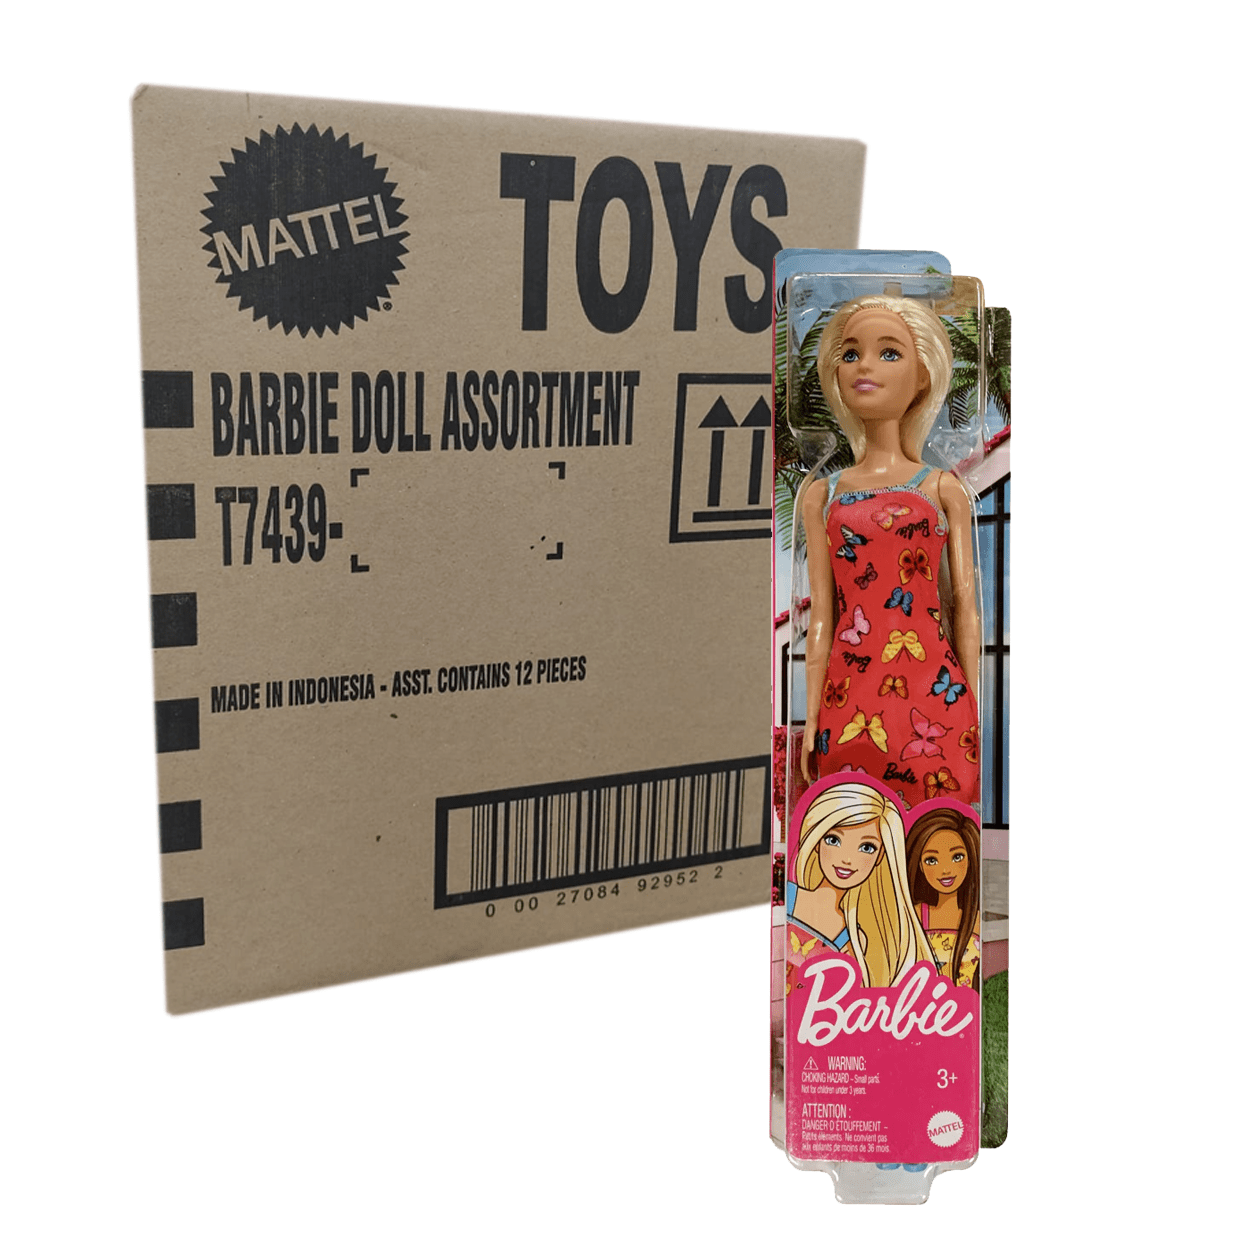 Comprar Boneca Barbie look completo (vários modelos) de Mattel